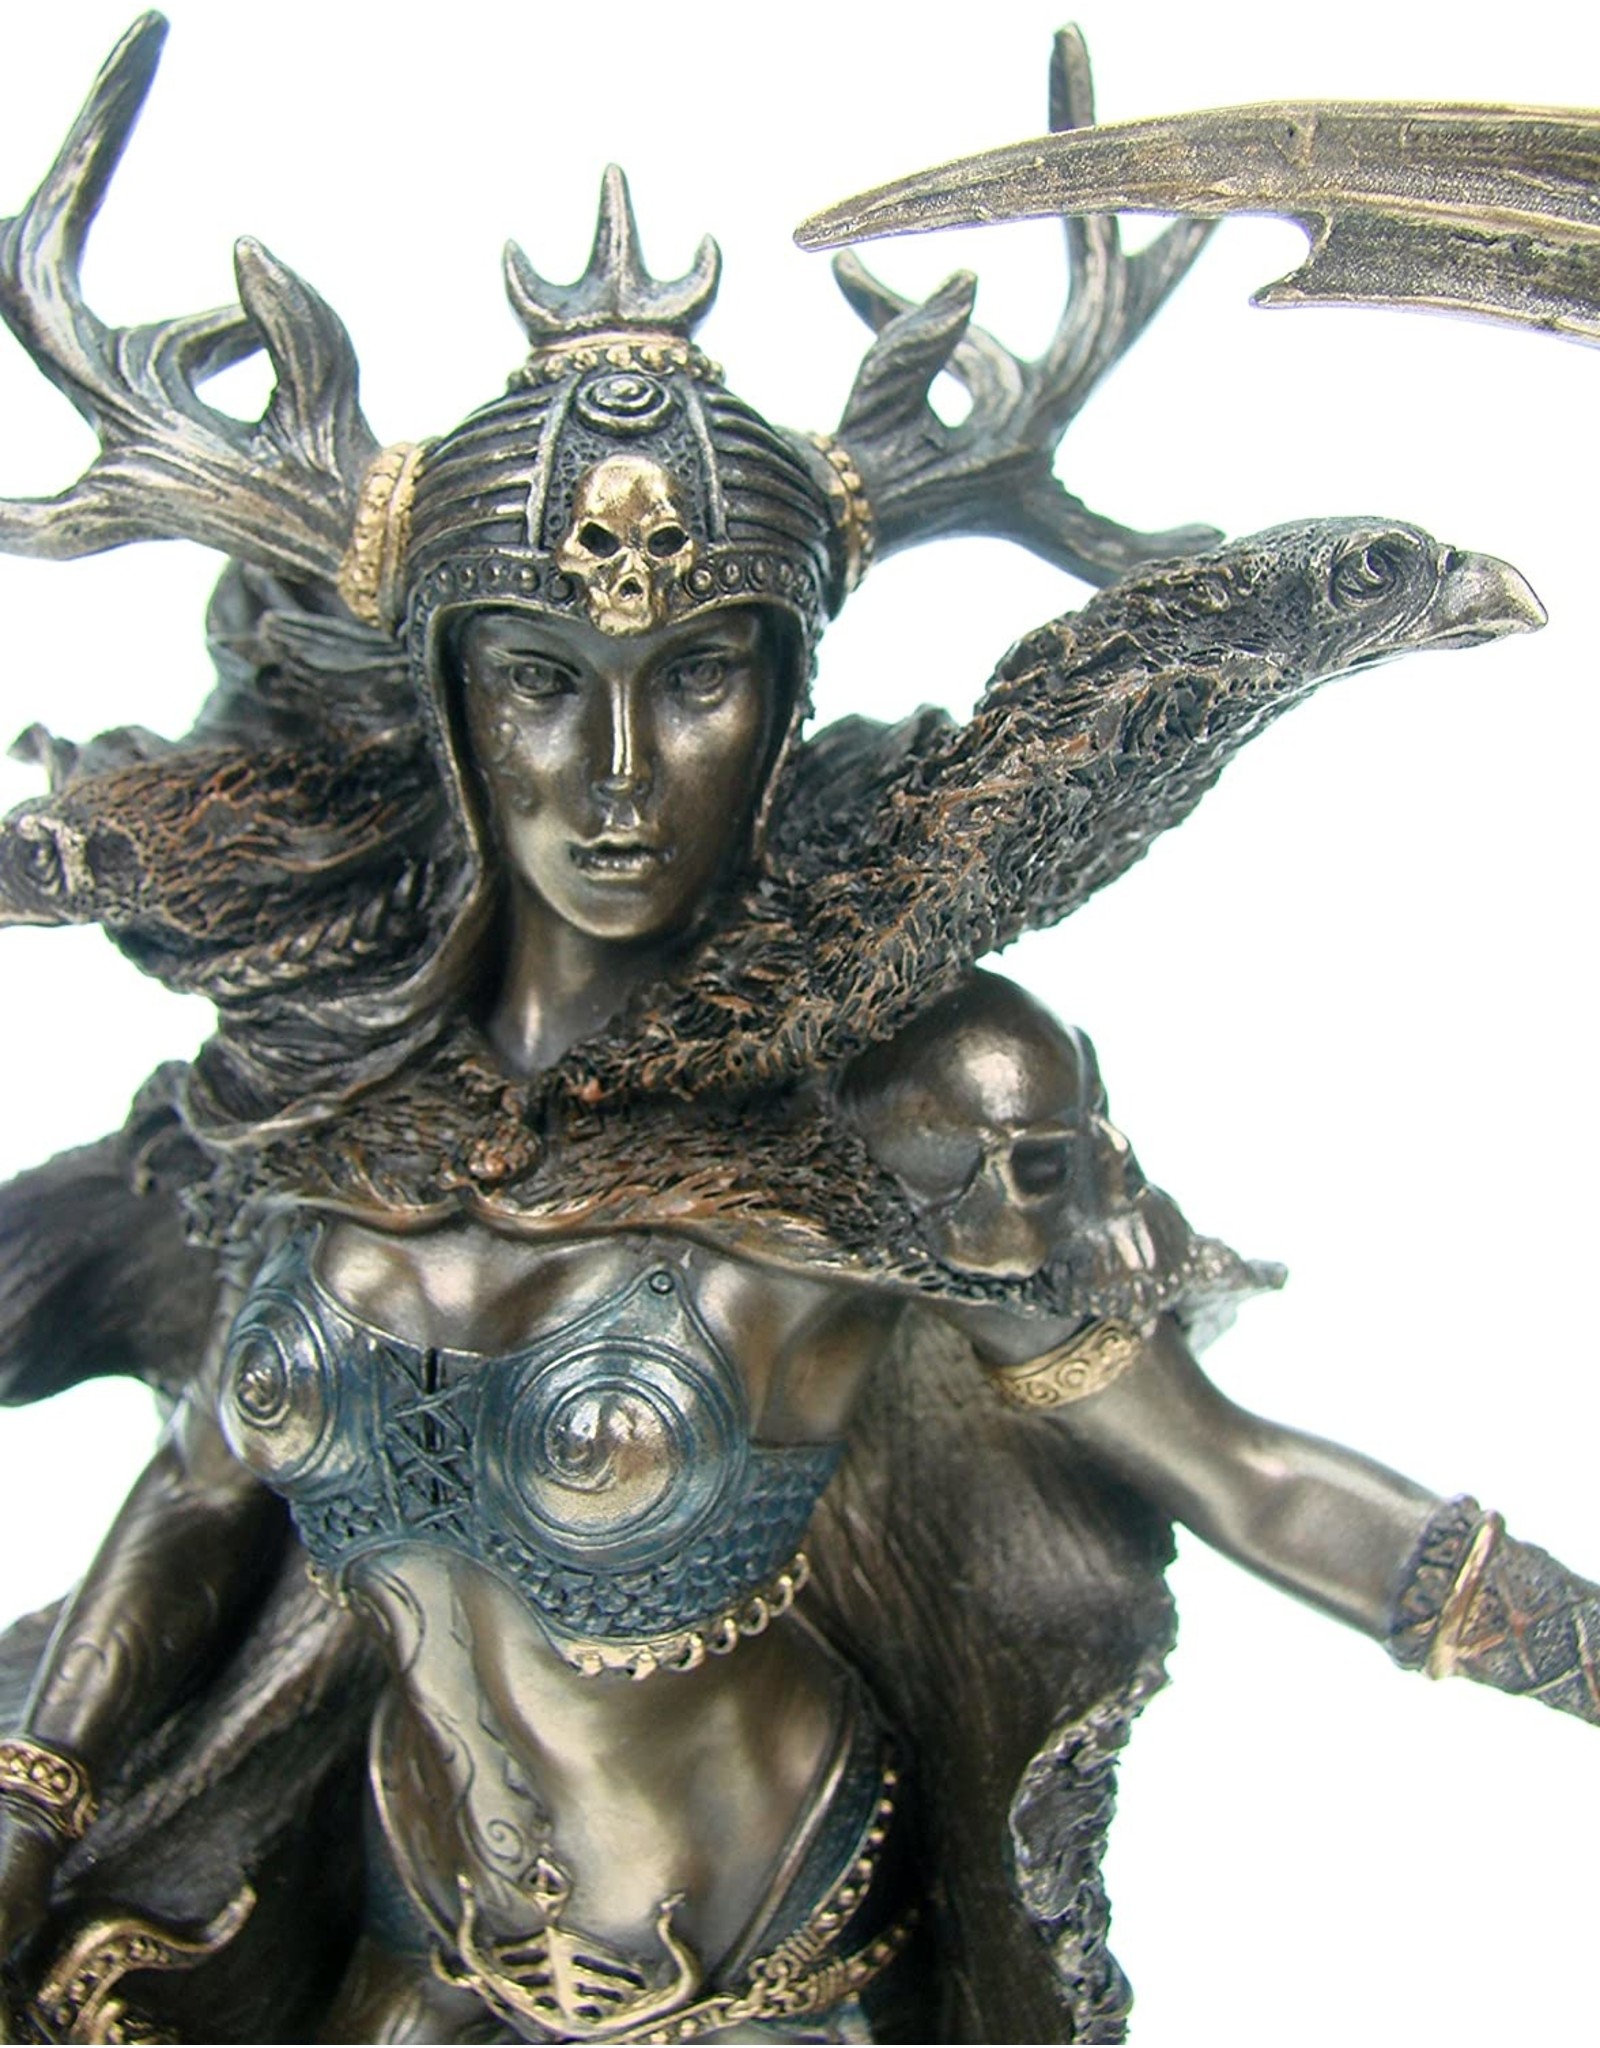 Veronese Design Giftware & Lifestyle - Hel Norse Goddess of the Underworld Bronzed Statue 26cm